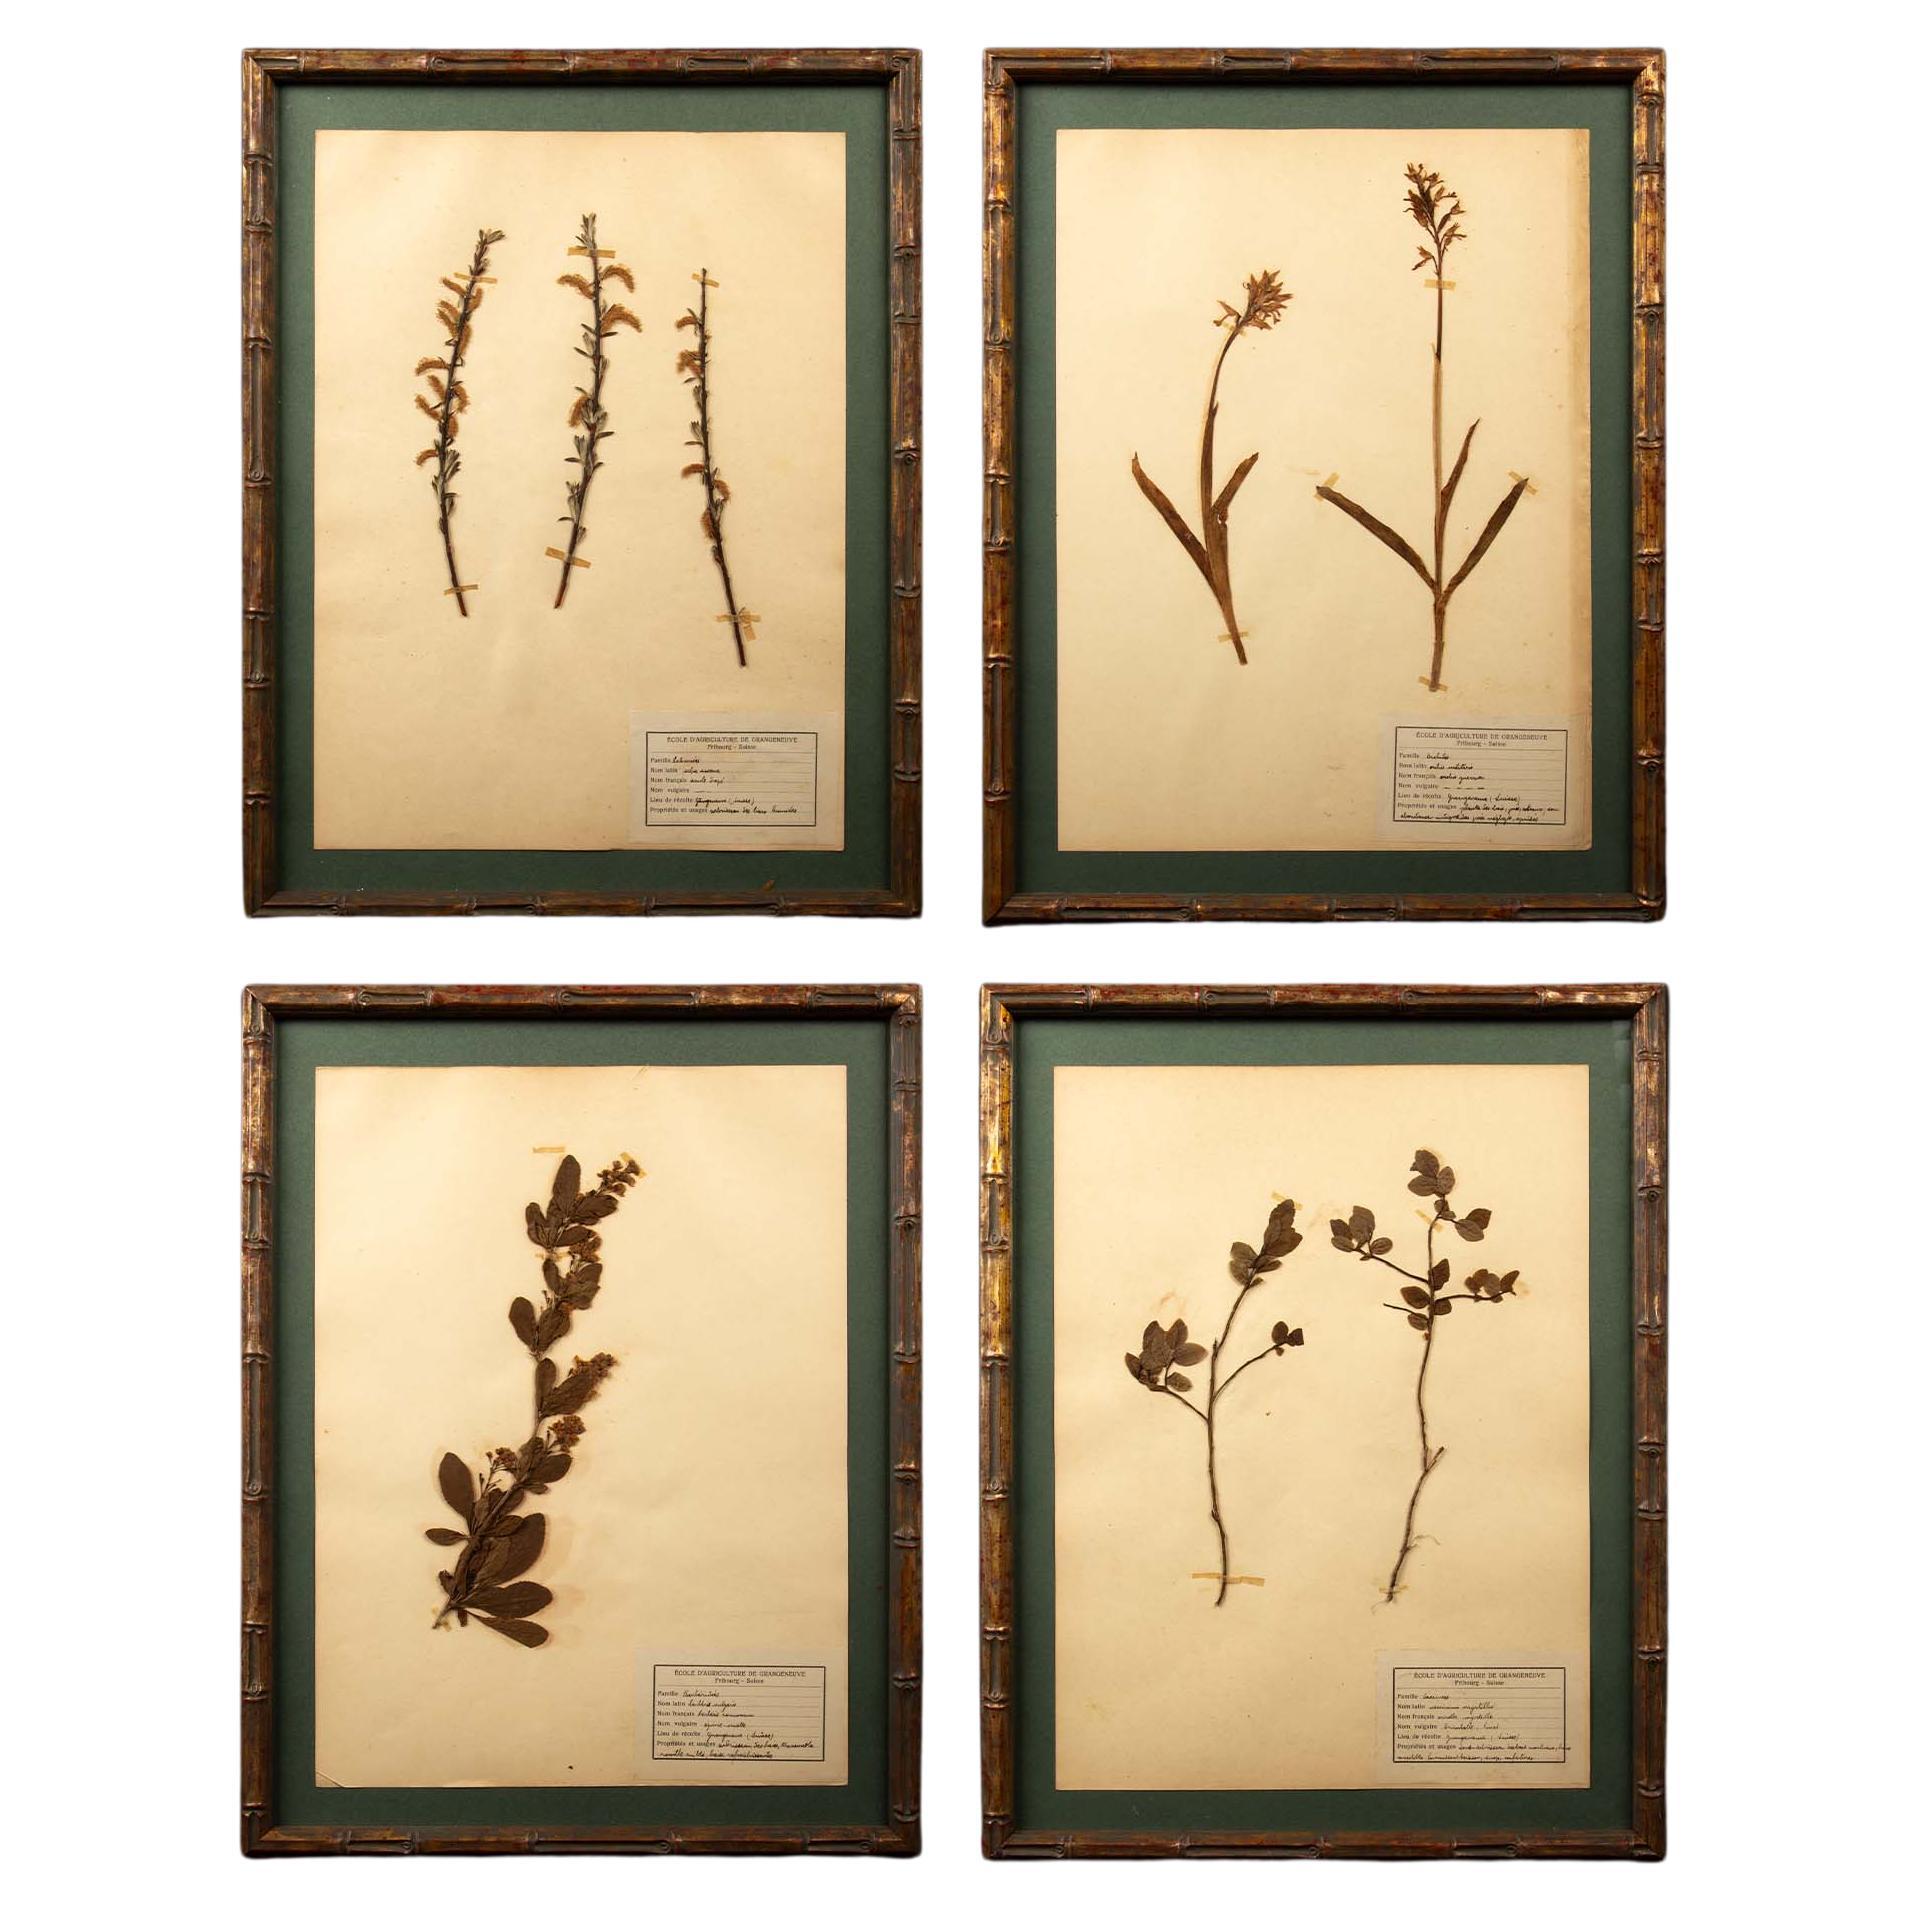 Vergoldete gerahmte botanische Herbier-Exemplare aus dem 19. Jahrhundert